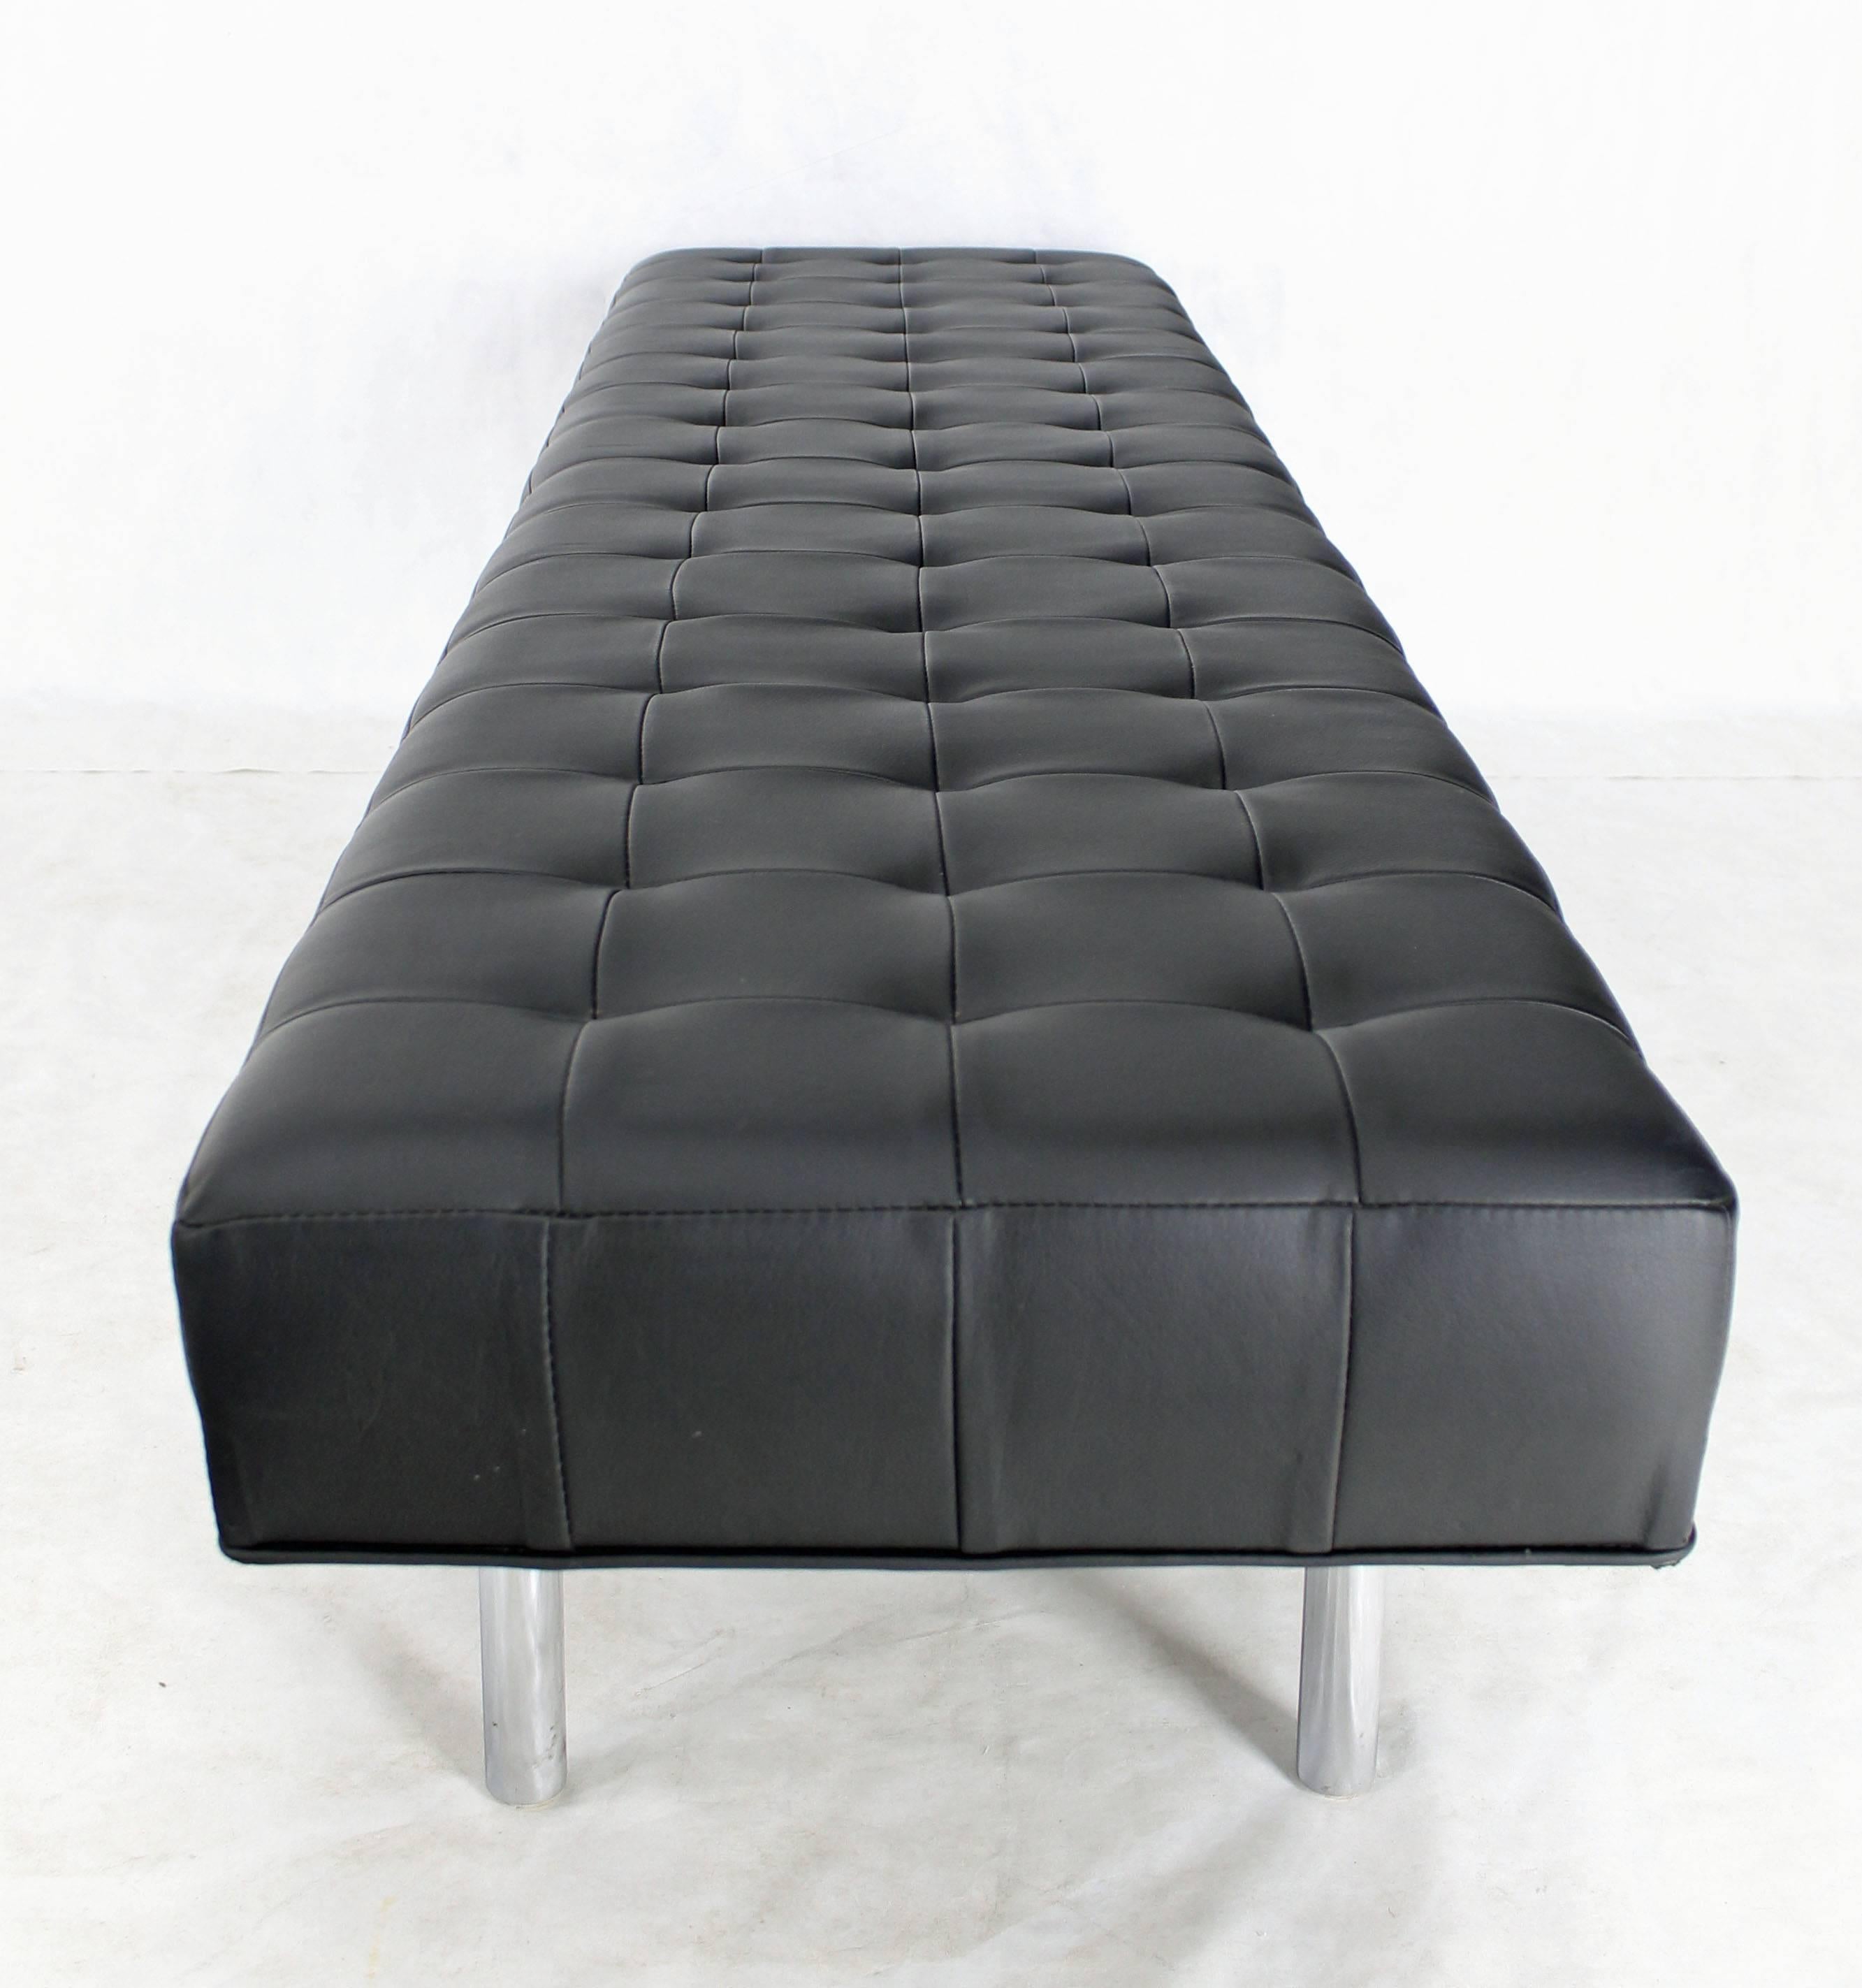 Mid-Century Modern Tufted Black Upholstery Long Modern Bench on Chrome Cylinder Legs